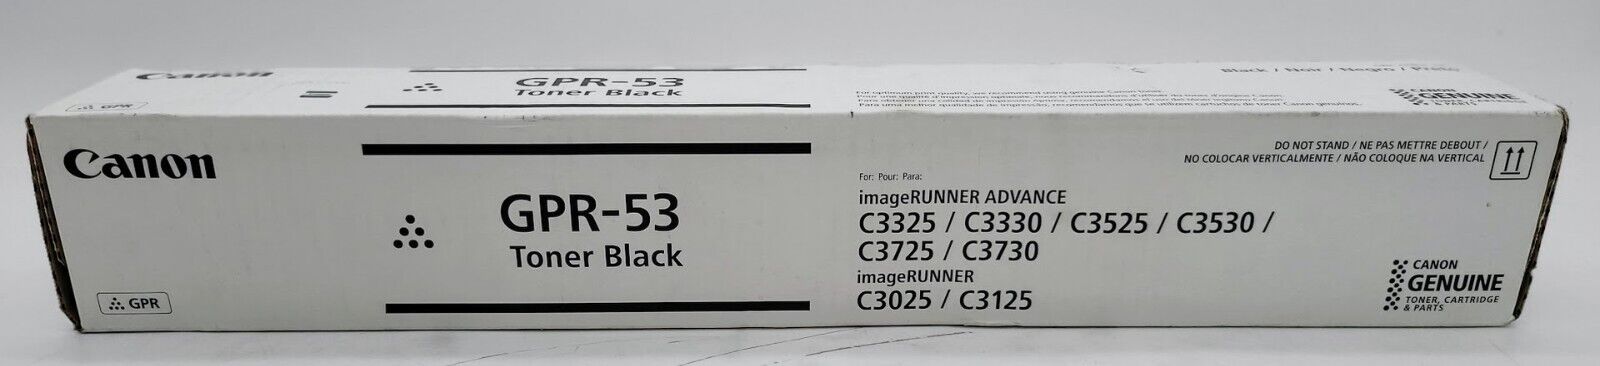 CANON GPR-53 TONER CARTRIDGE BLACK